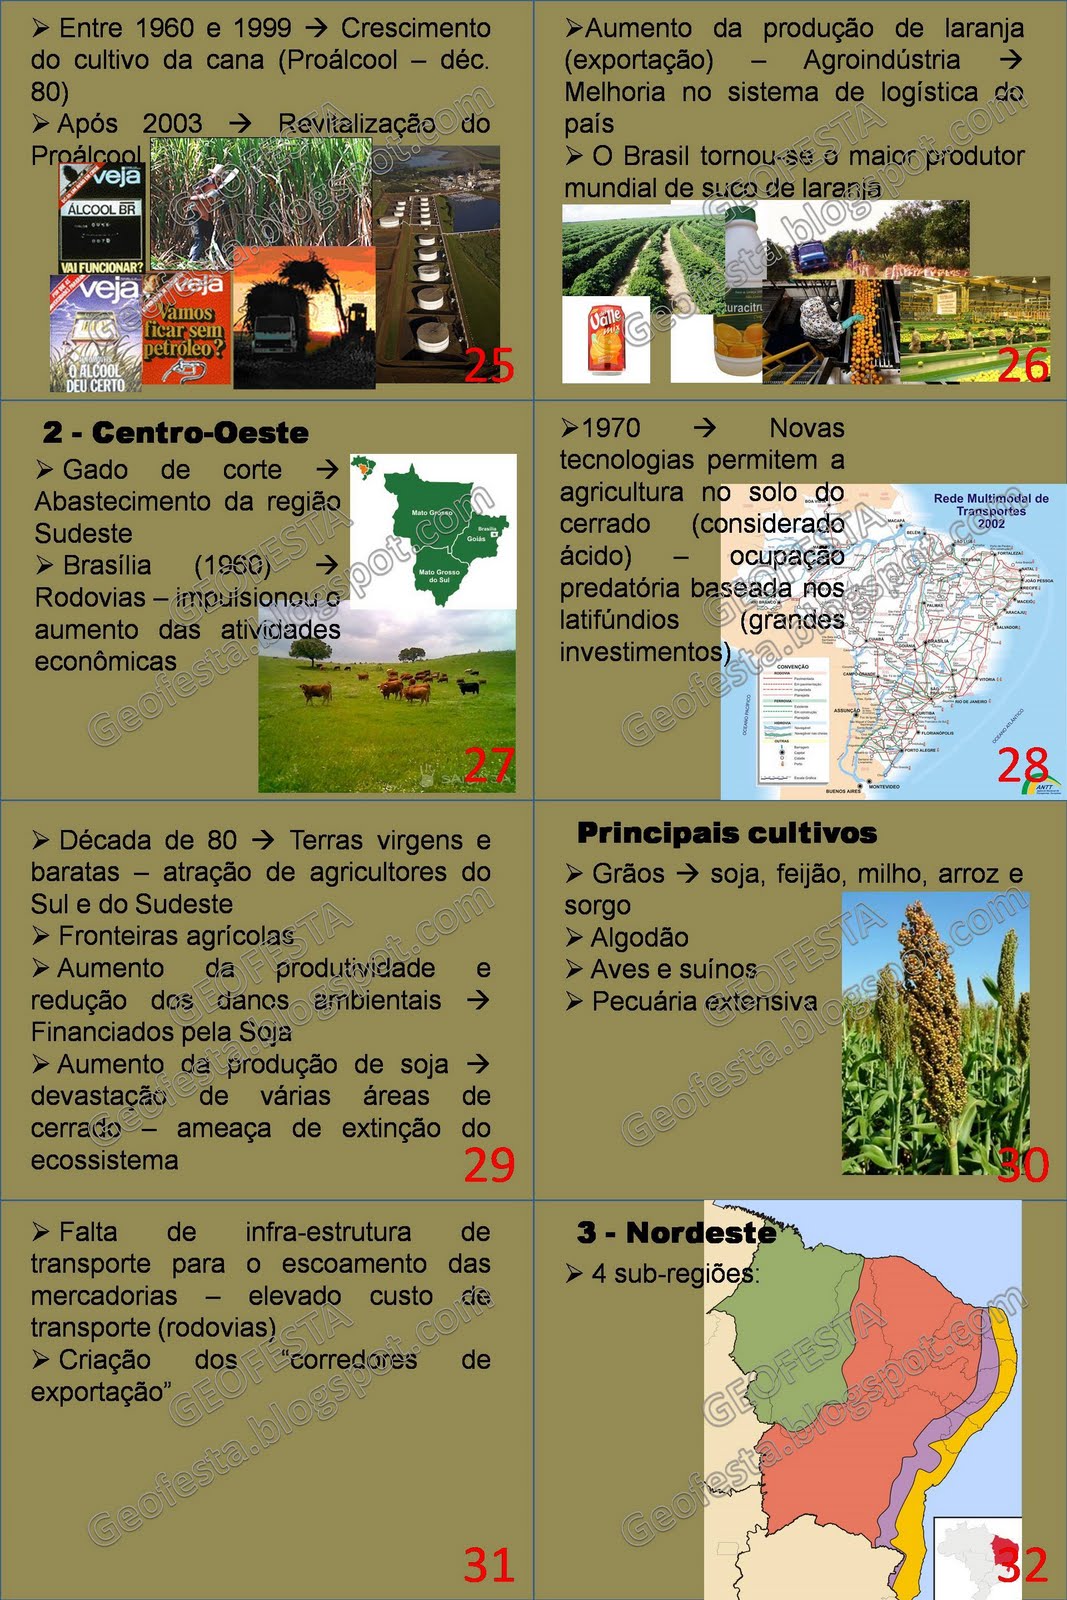 Geofesta: Atividades agropecuárias no Brasil